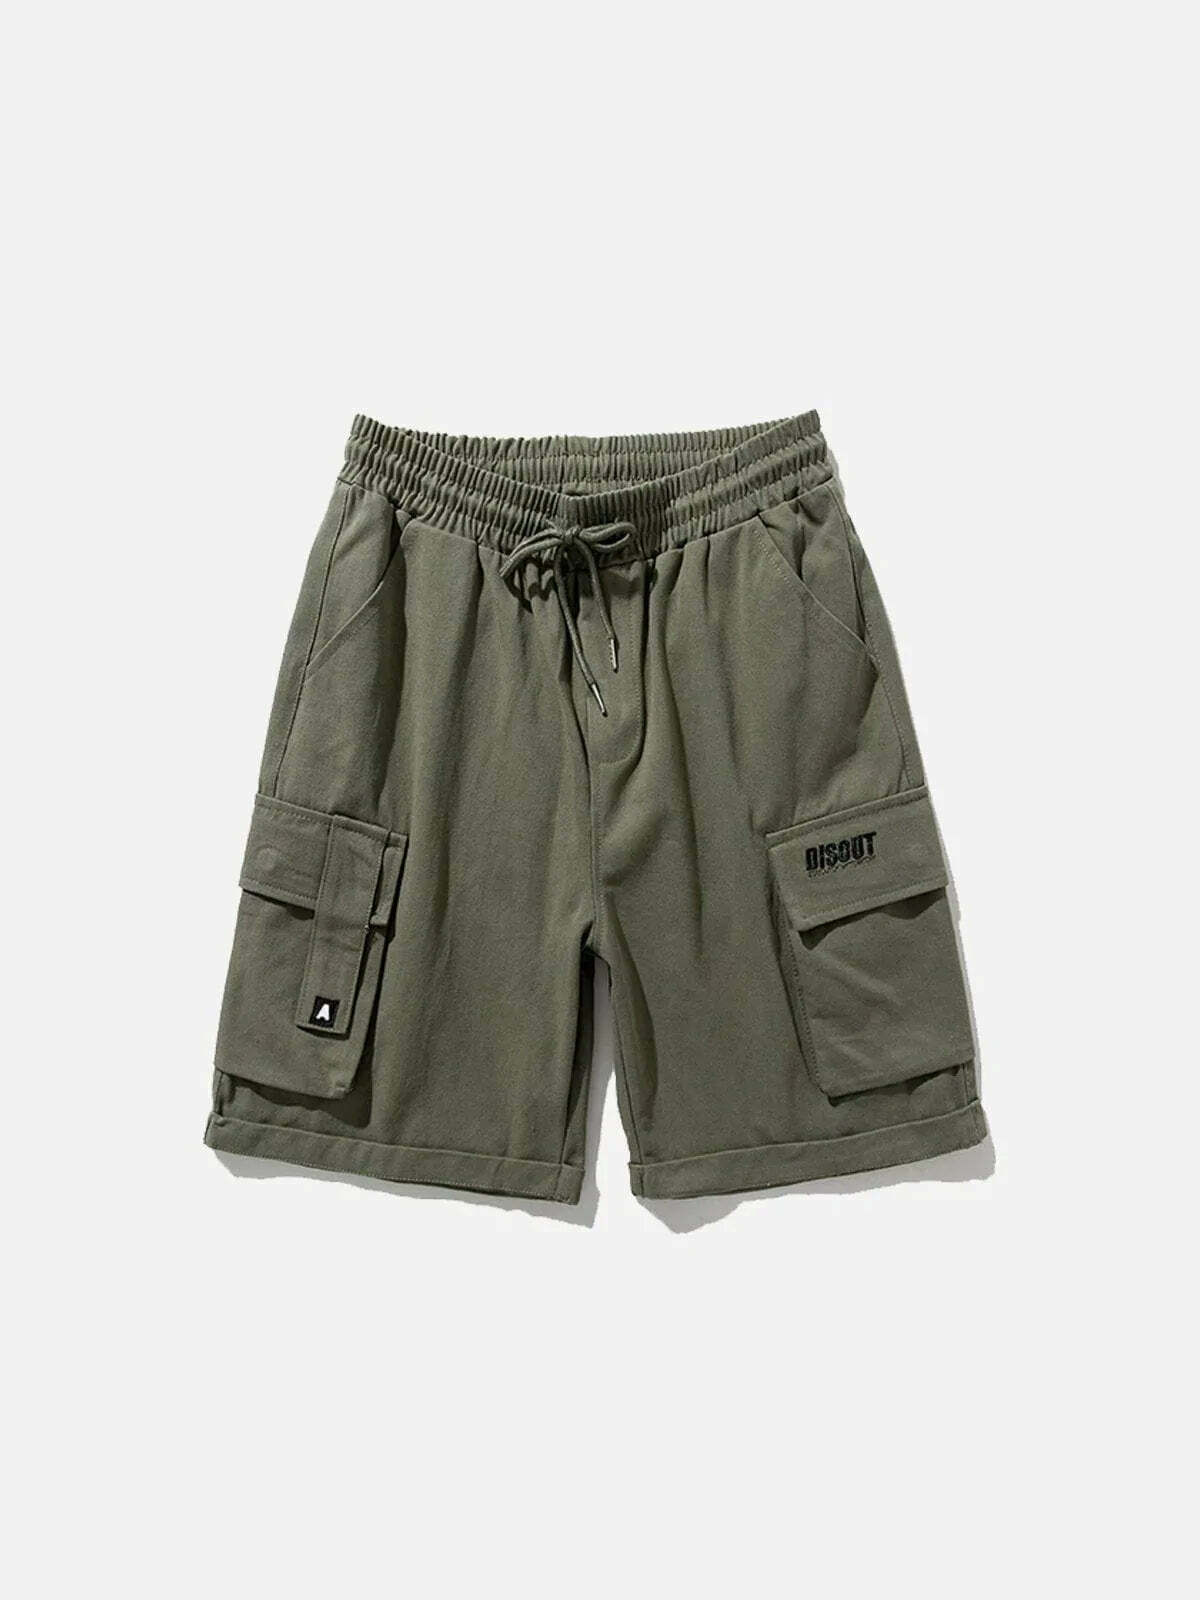 discreet side pocket shorts urban functional essential 7161